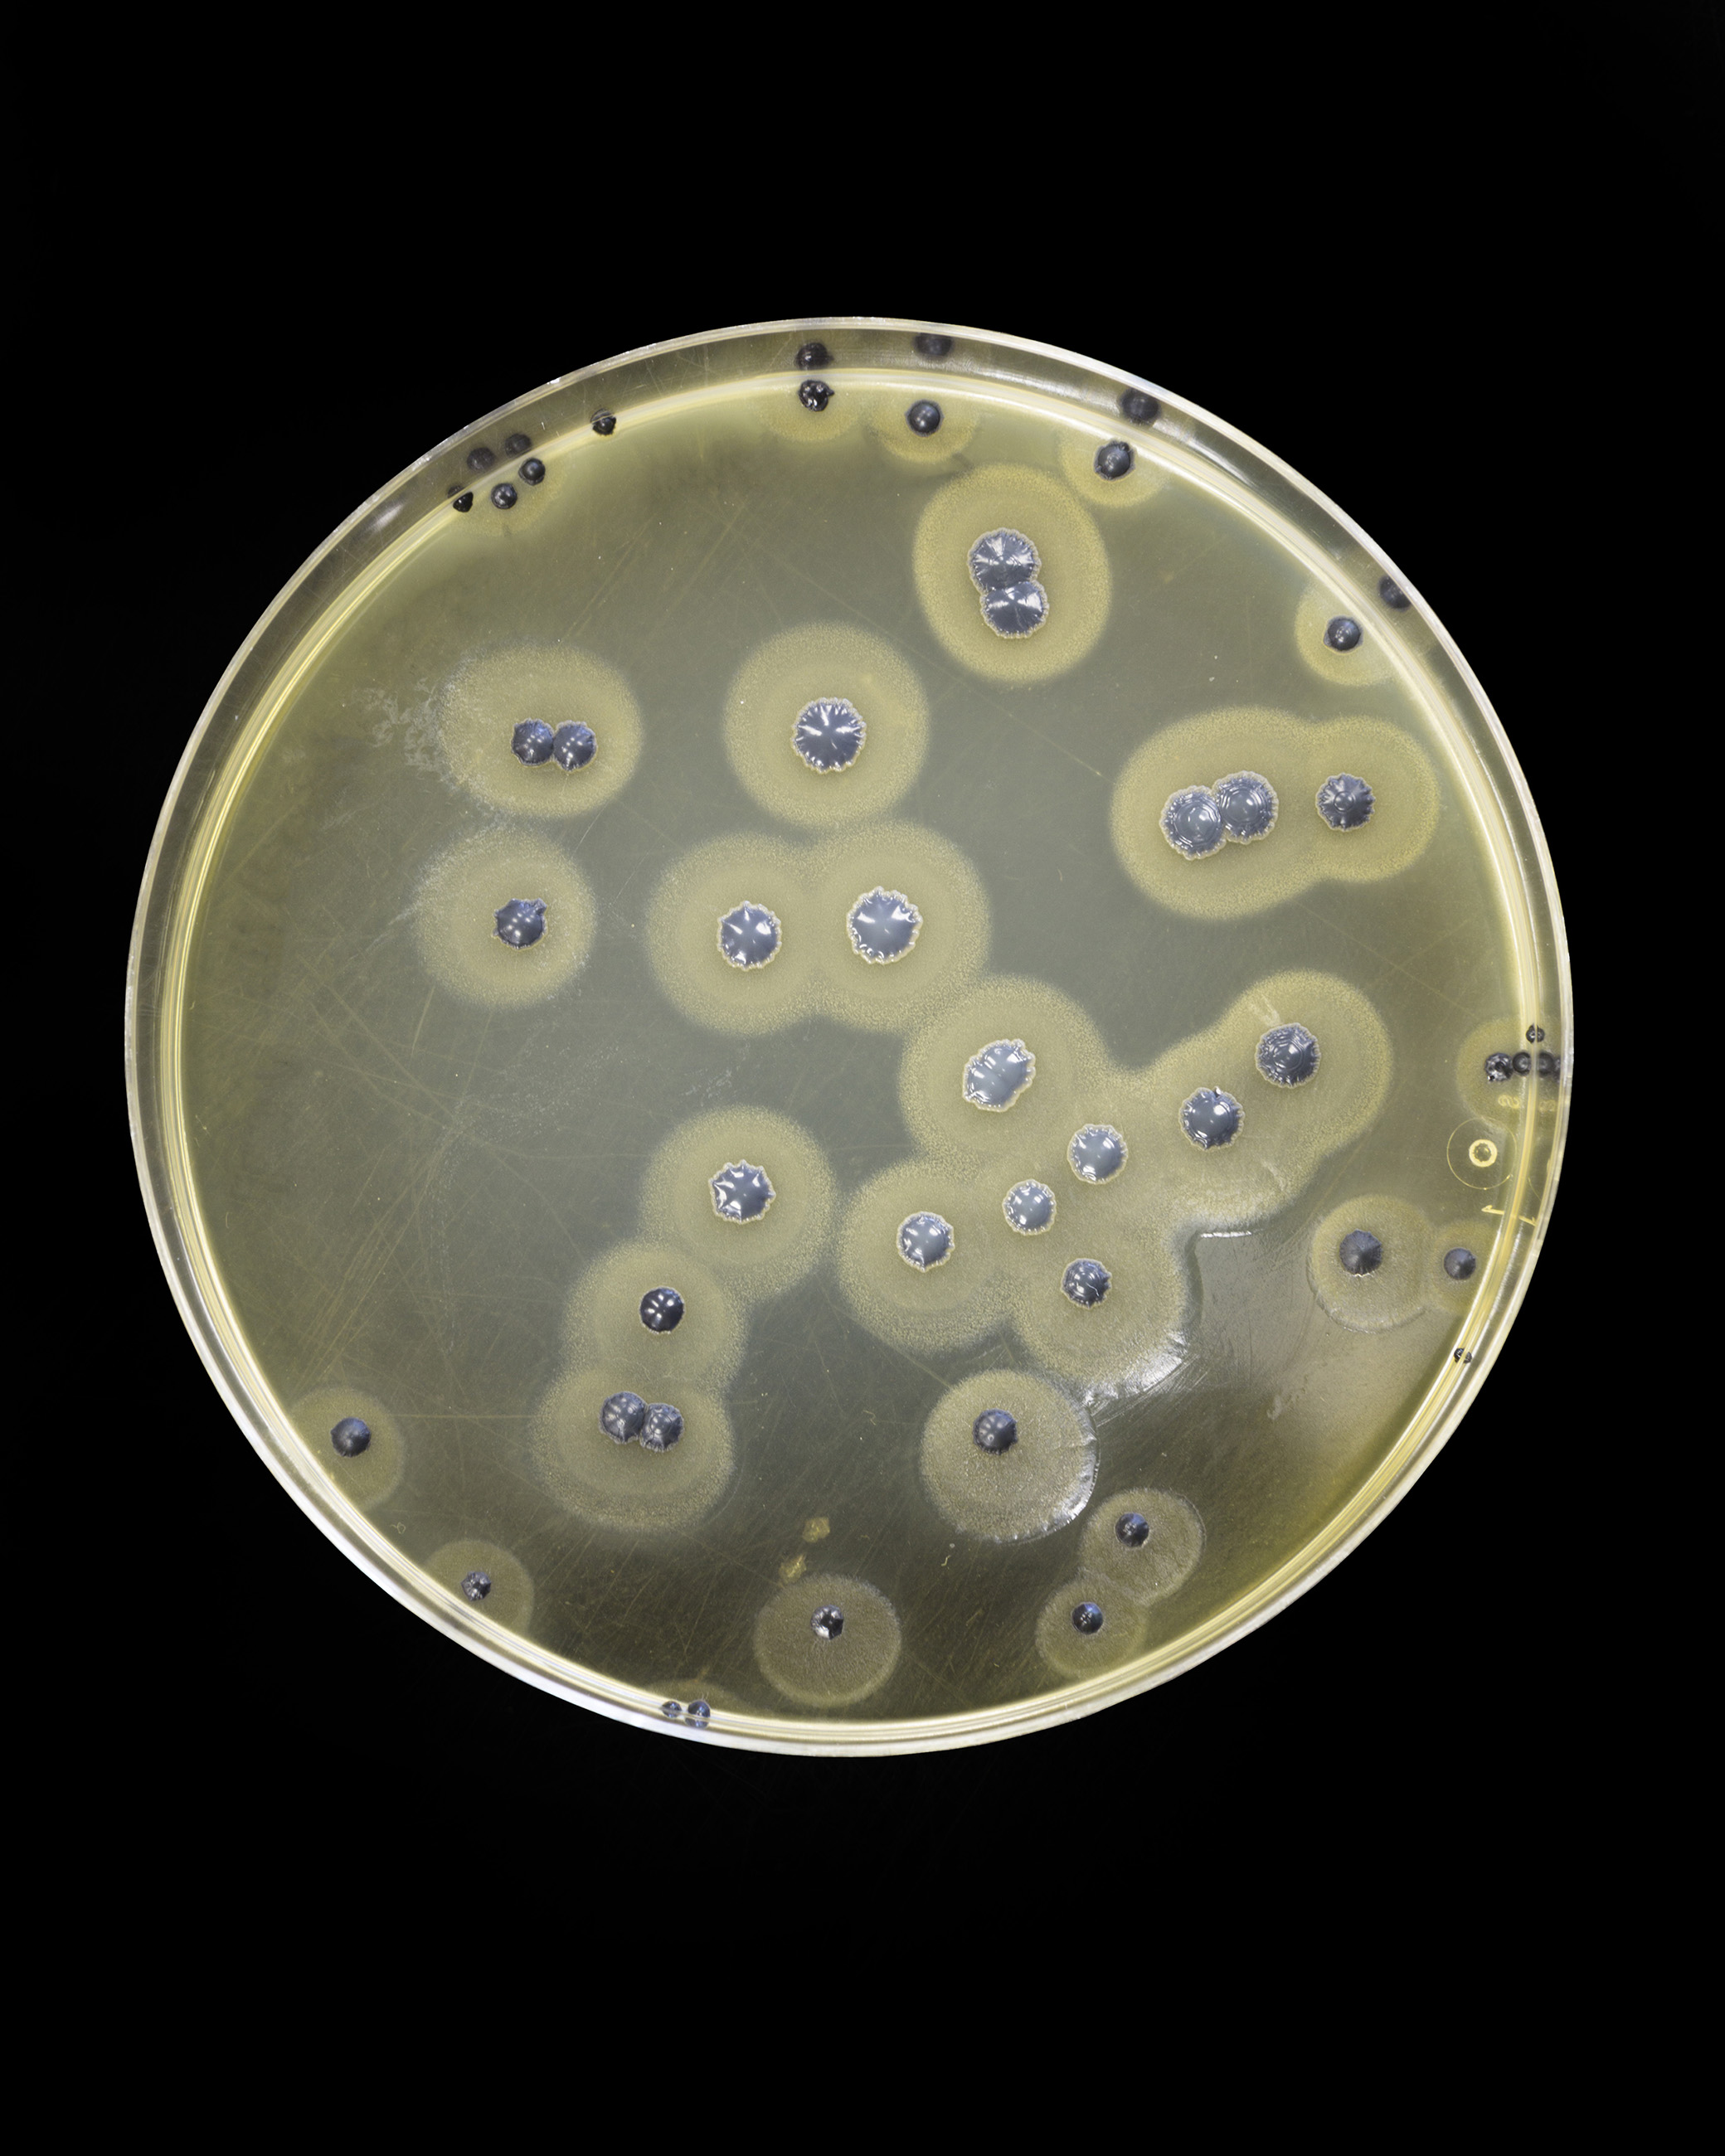 Bacteria growing on agar photo